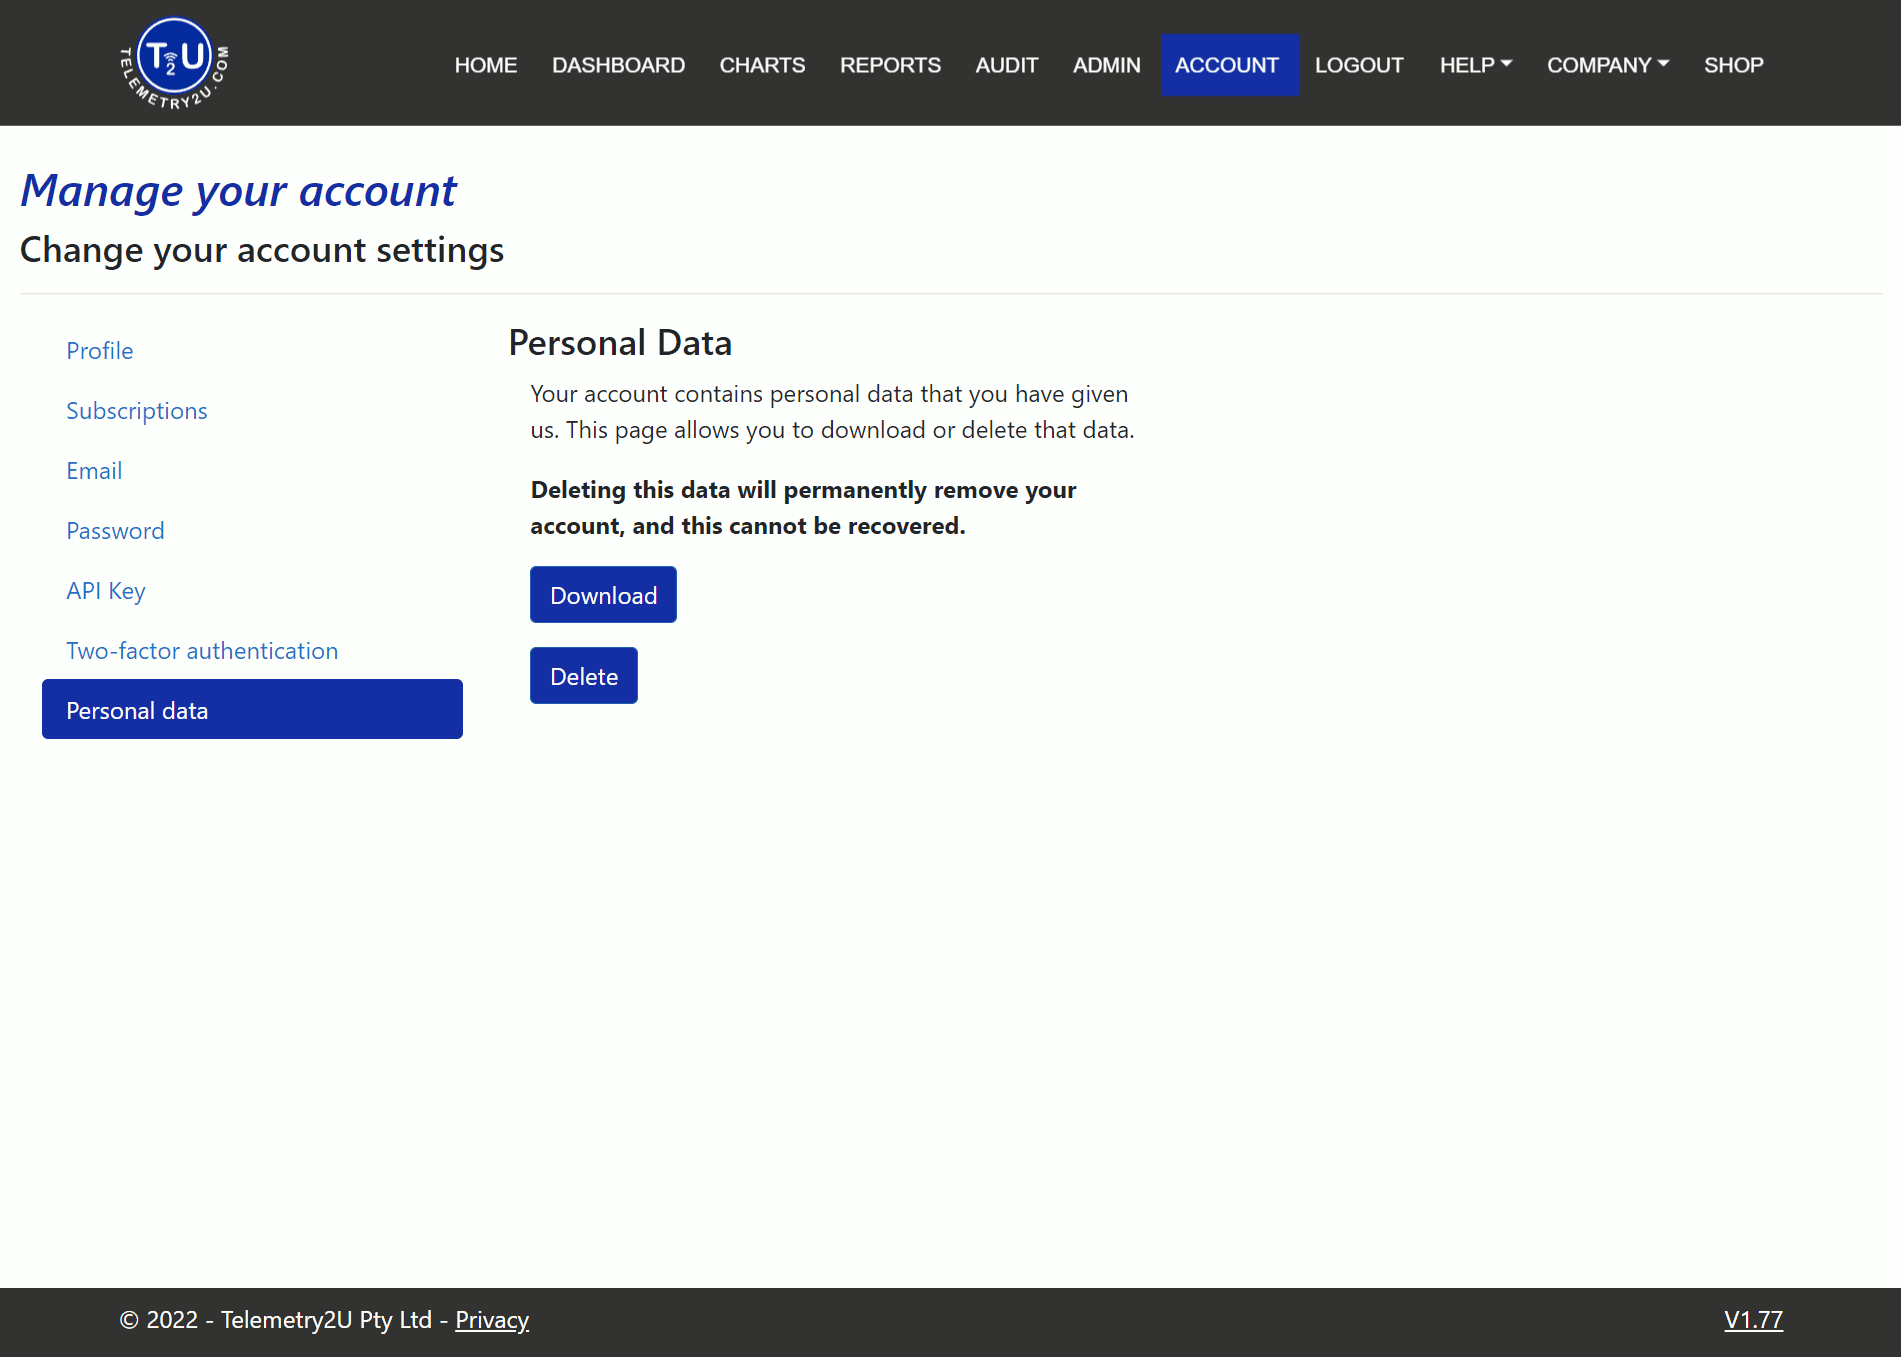 7.8 - Delete Personal Data and Close Account